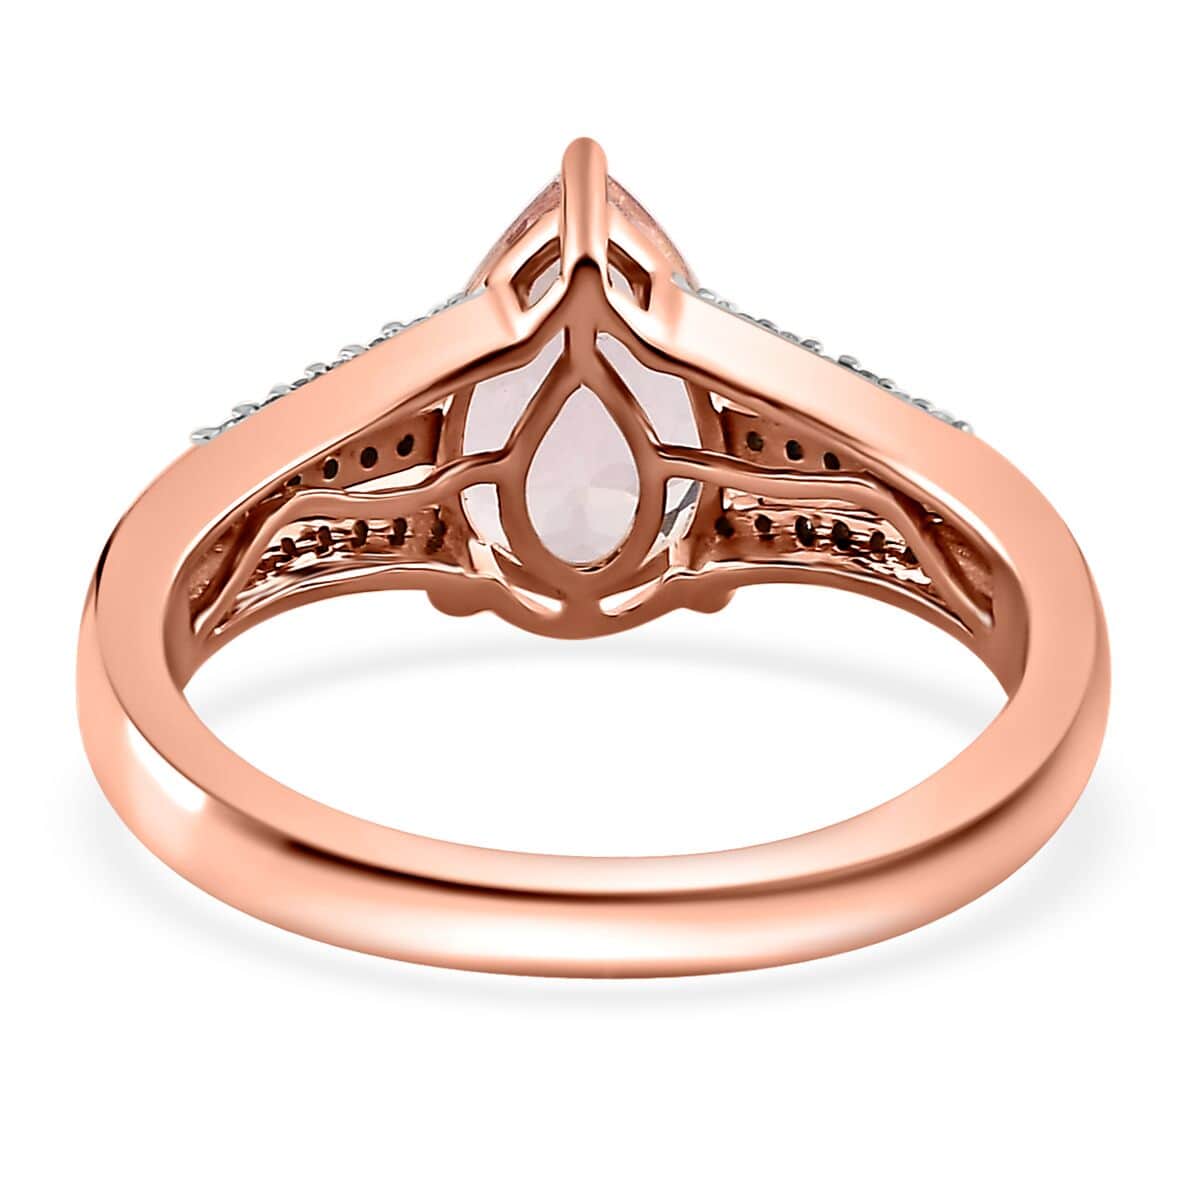 Luxoro 10K Rose Gold Premium Pink Morganite and Diamond Ring (Size 6.0) 1.75 ctw image number 4